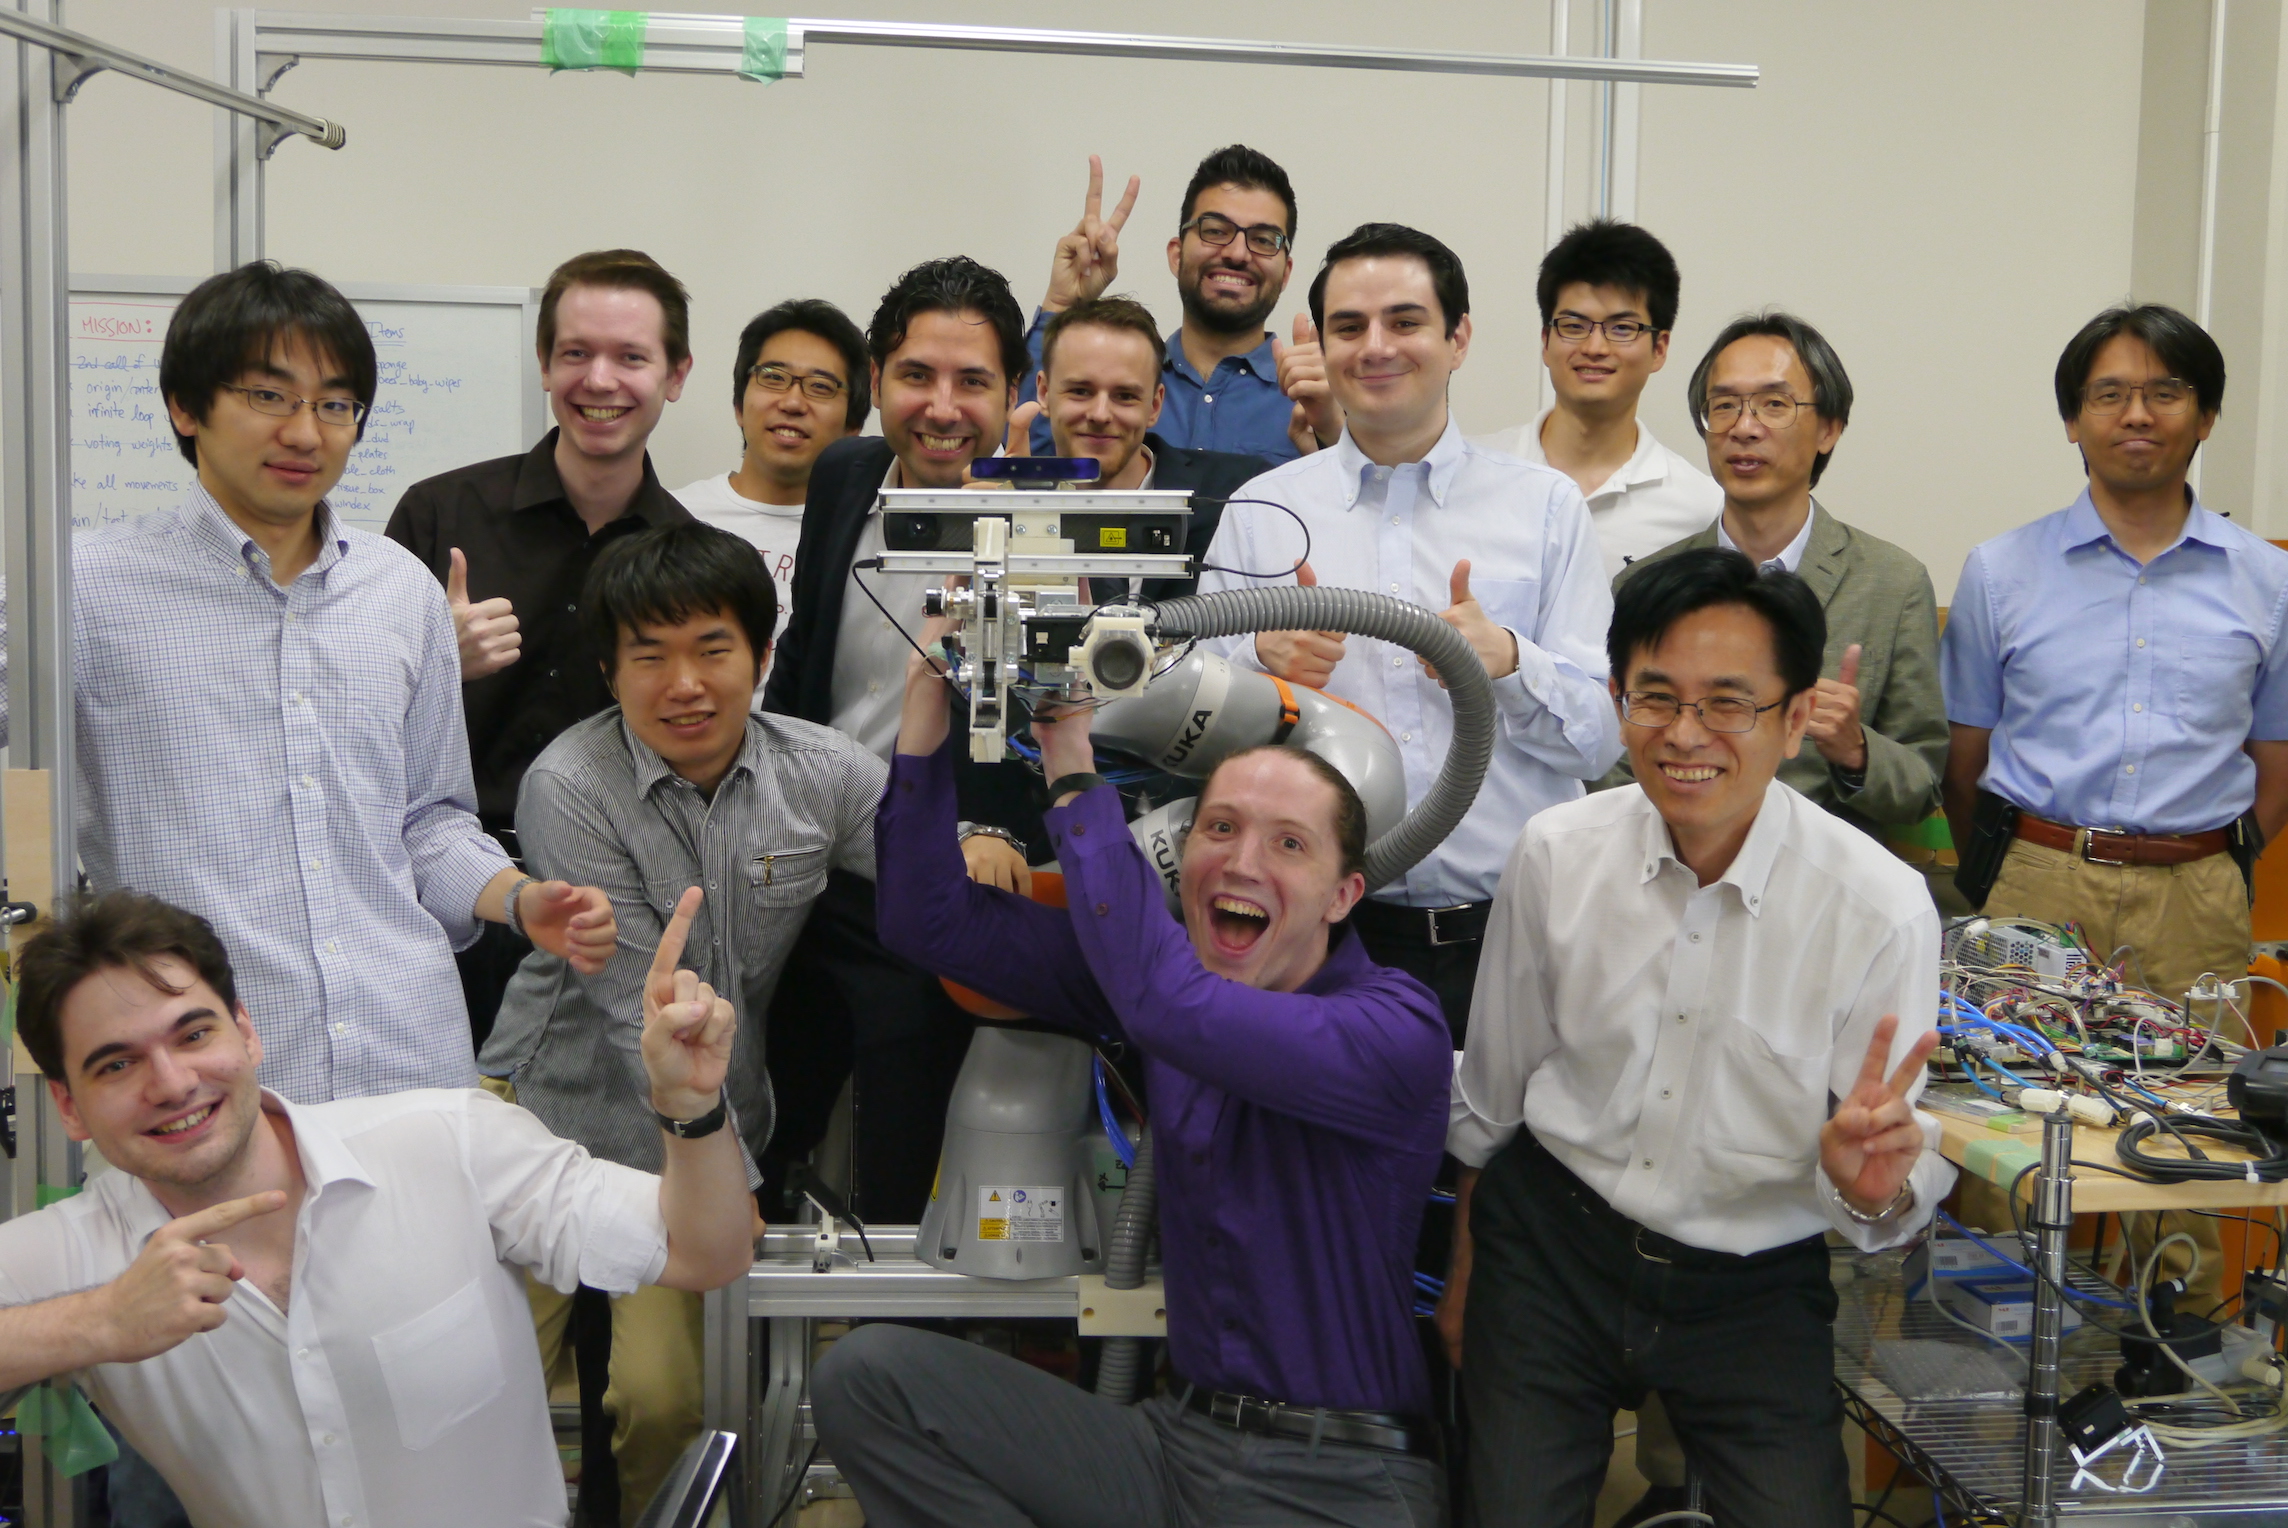 Team NAIST-Panasonic with their robot